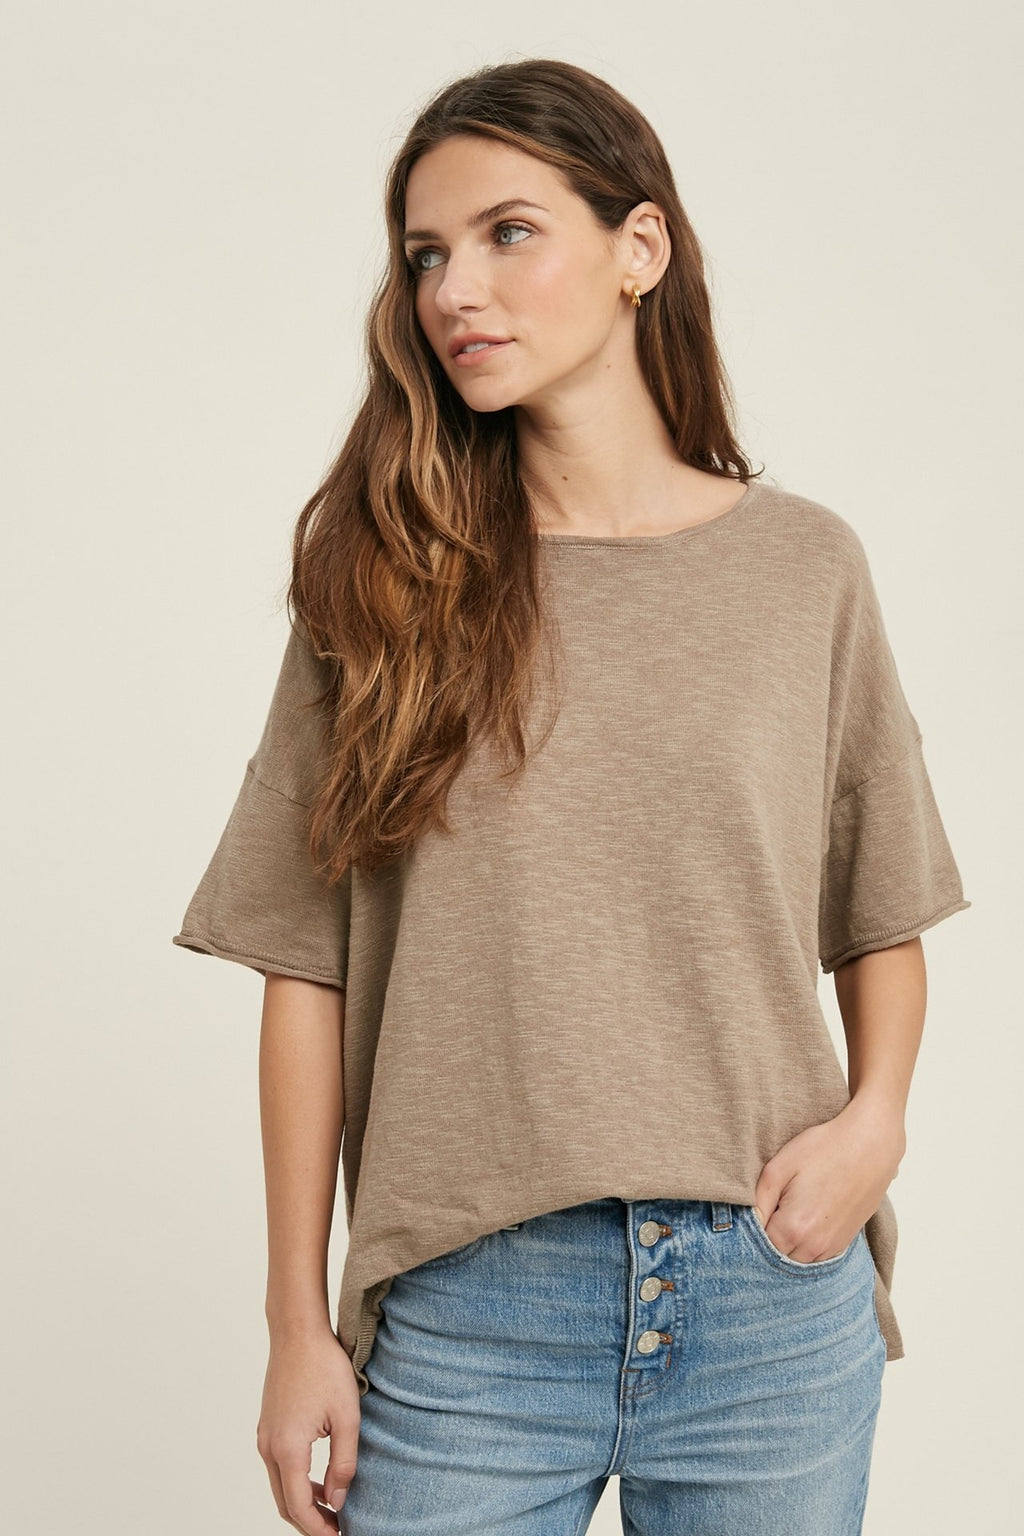 Oversized drop shoulder slub knit top with side slit detail  Ivy and Pearl Boutique Mocha M/L 